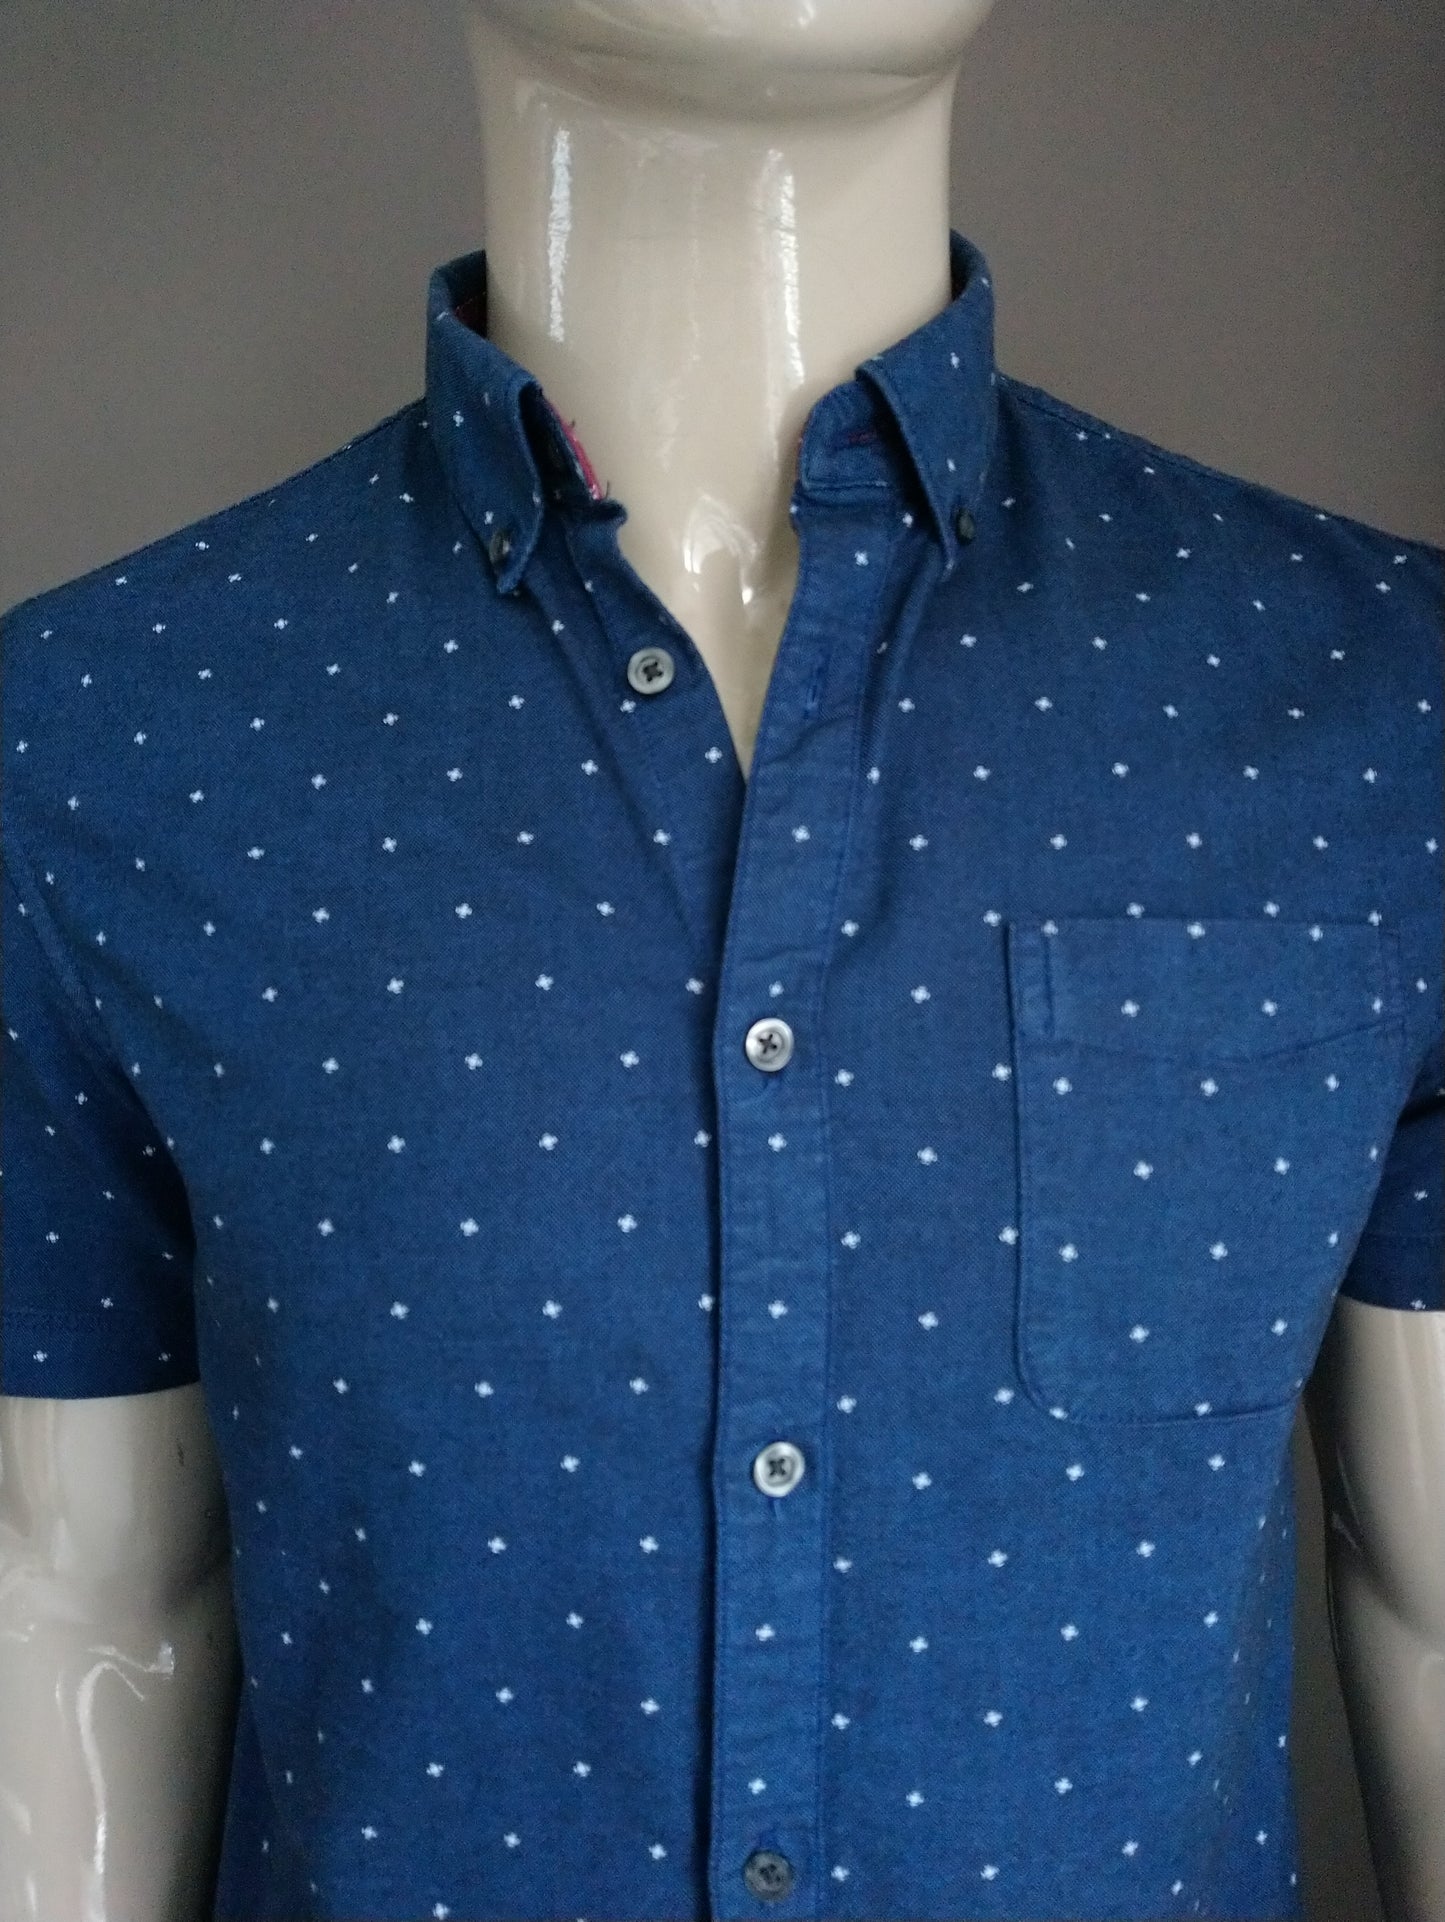 Burton Menswear Shirt Short Sleeve. Impression blanche bleue. Taille M.